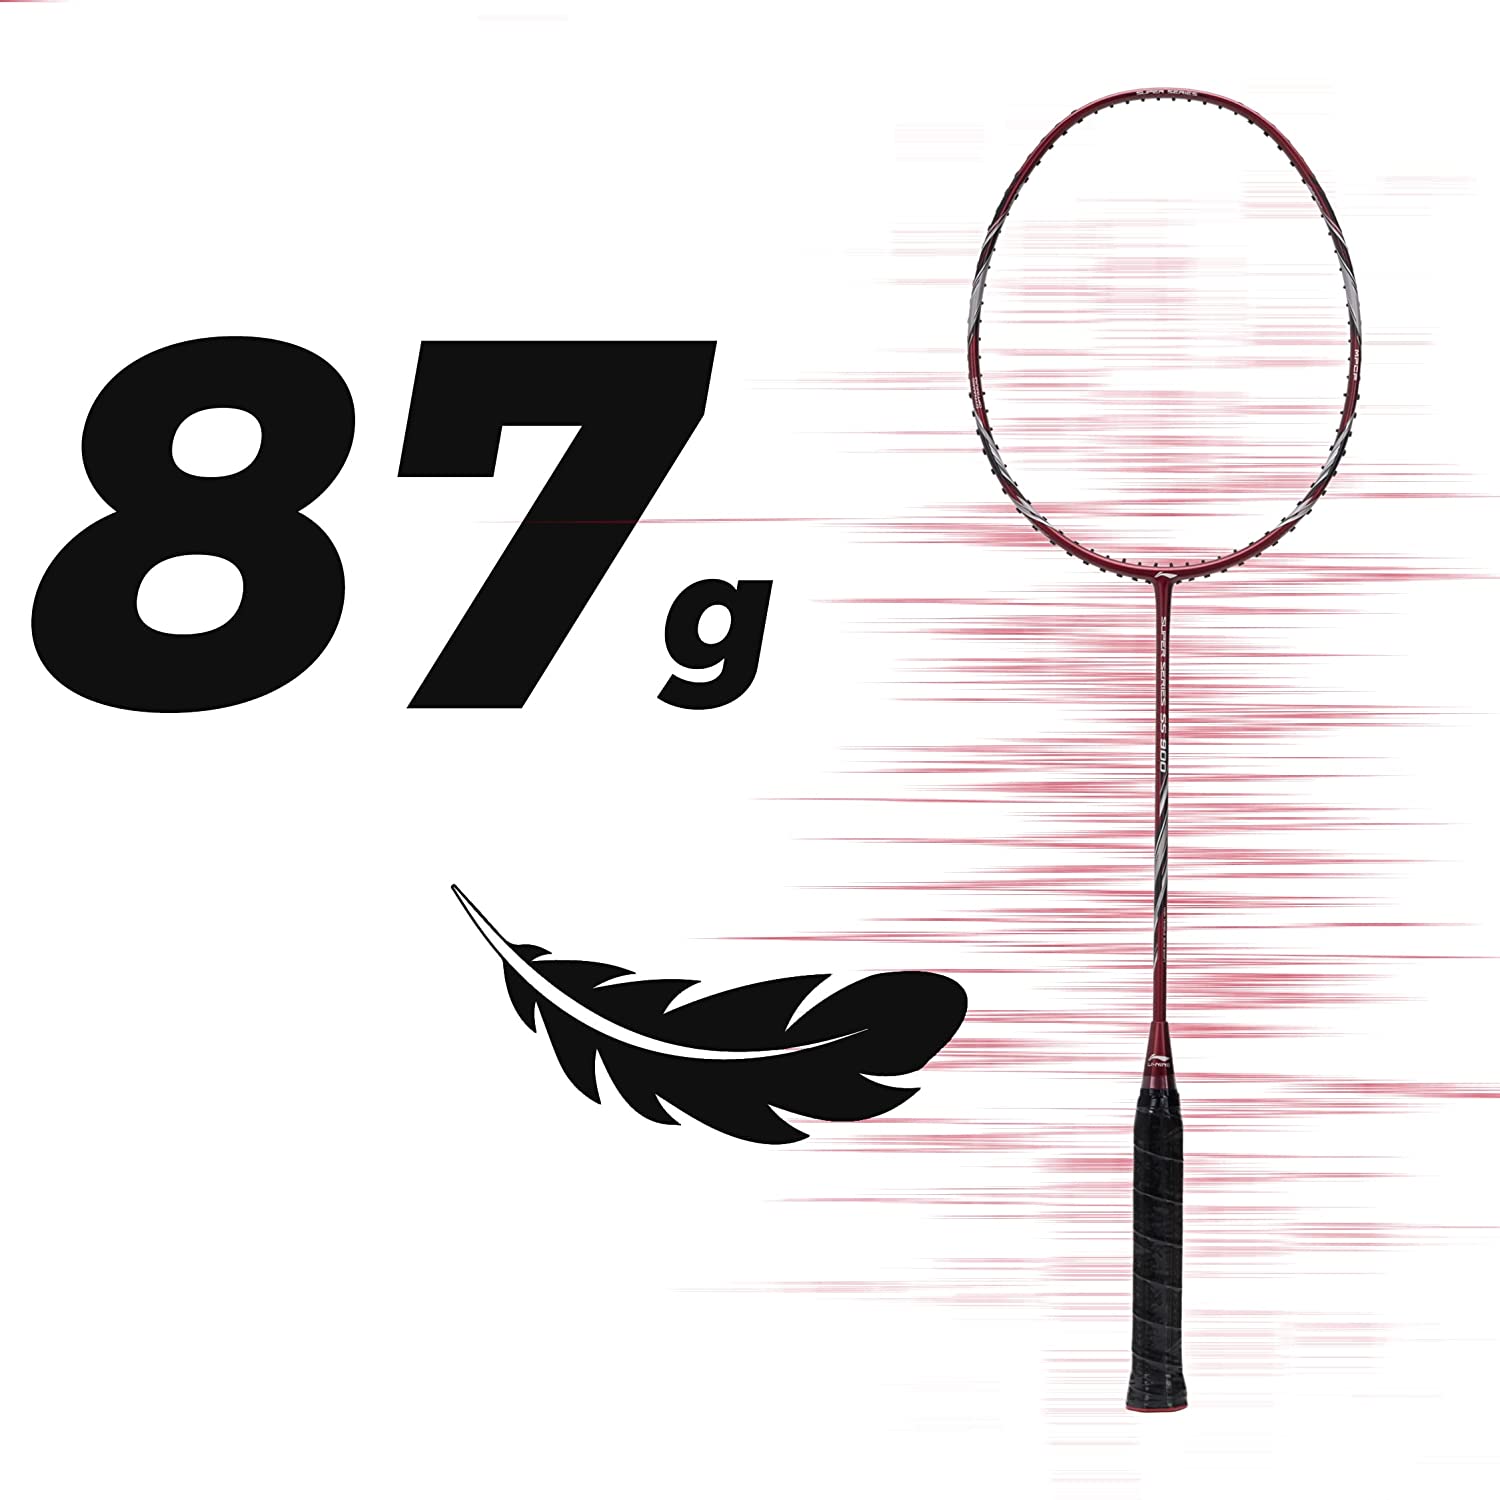 Li-Ning Super Series SS900 Strung Badminton Racquet - Red/Grey - Best Price online Prokicksports.com